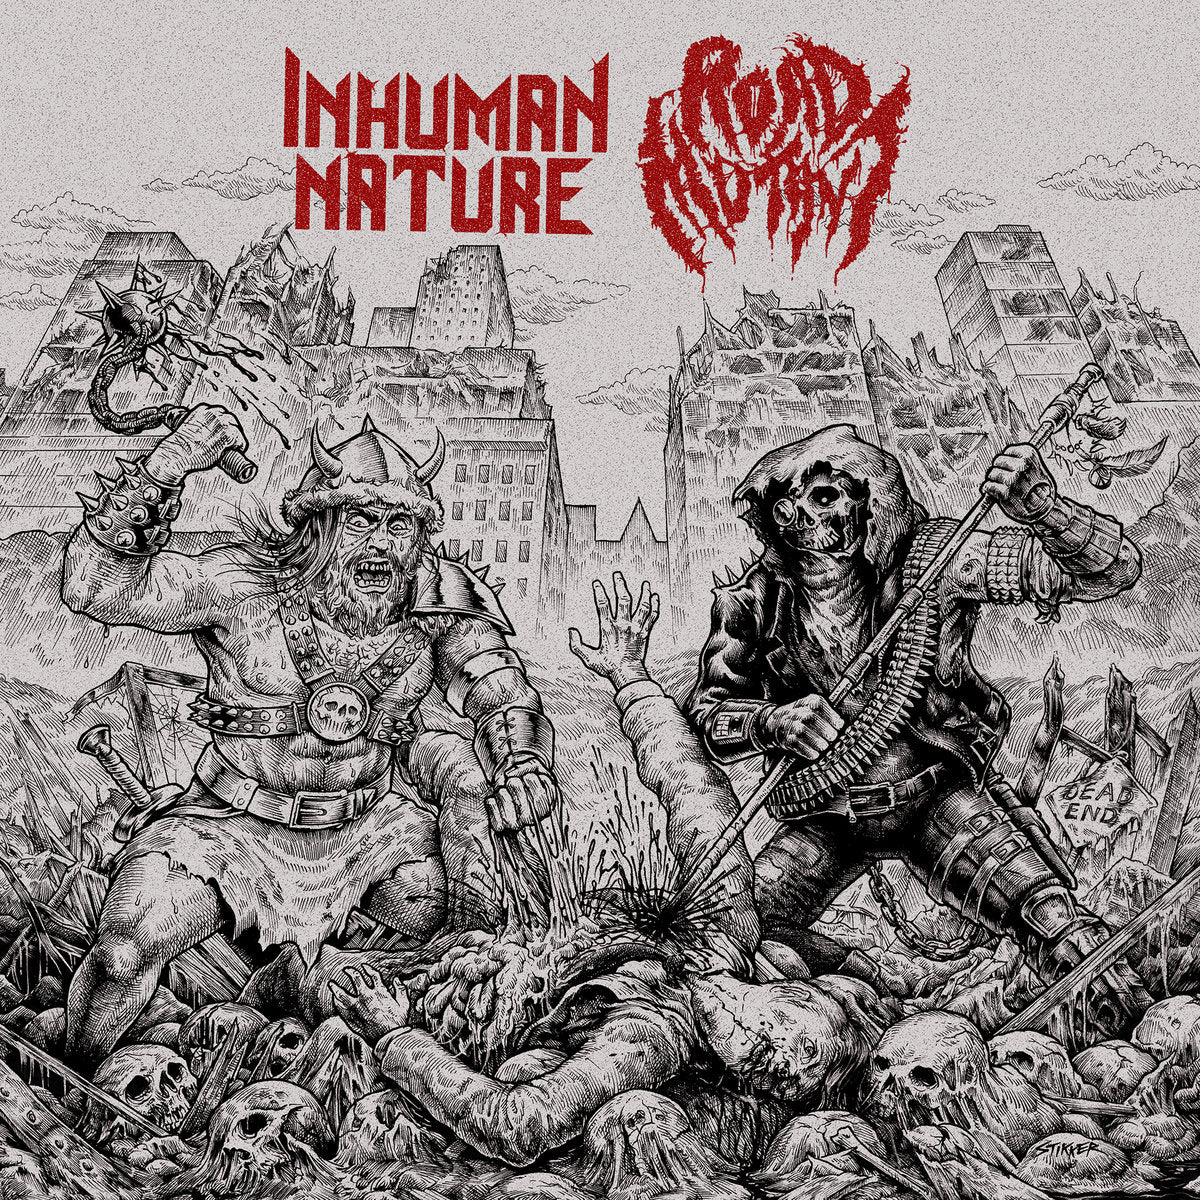 Inhuman Nature / Road Mutant 7" split - Black Vinyl